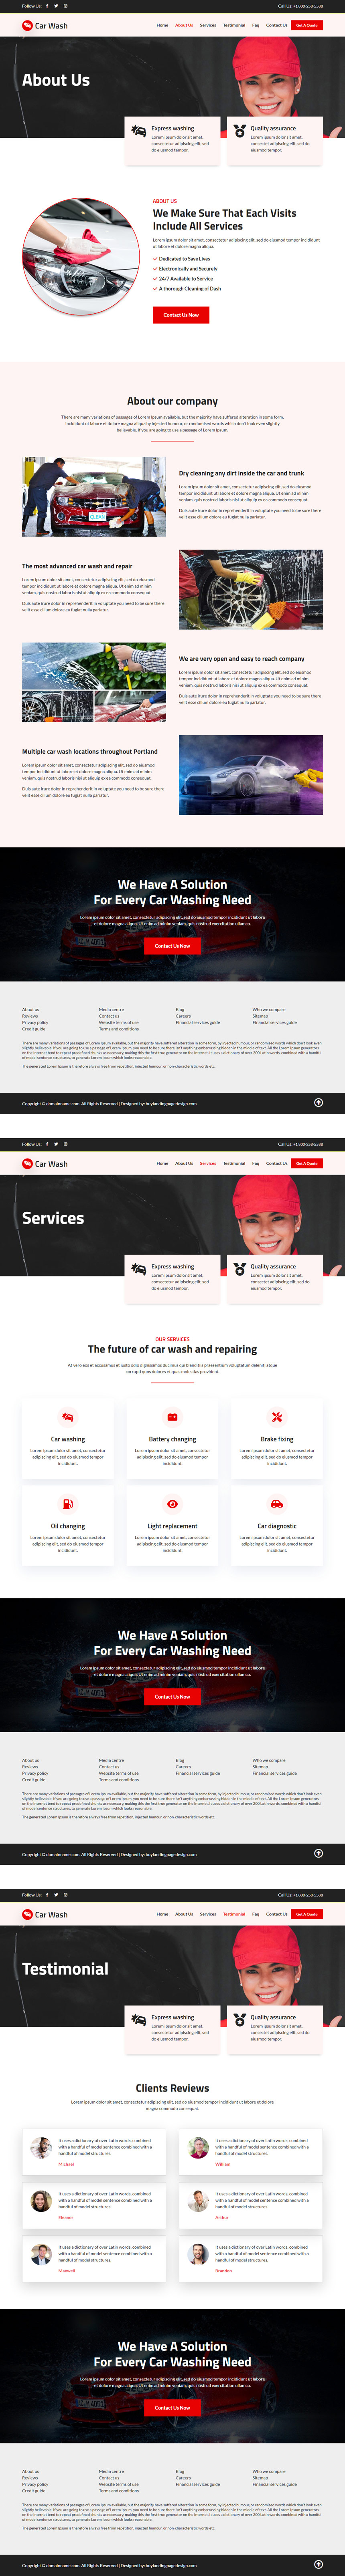 car wash and repairing service responsive website design